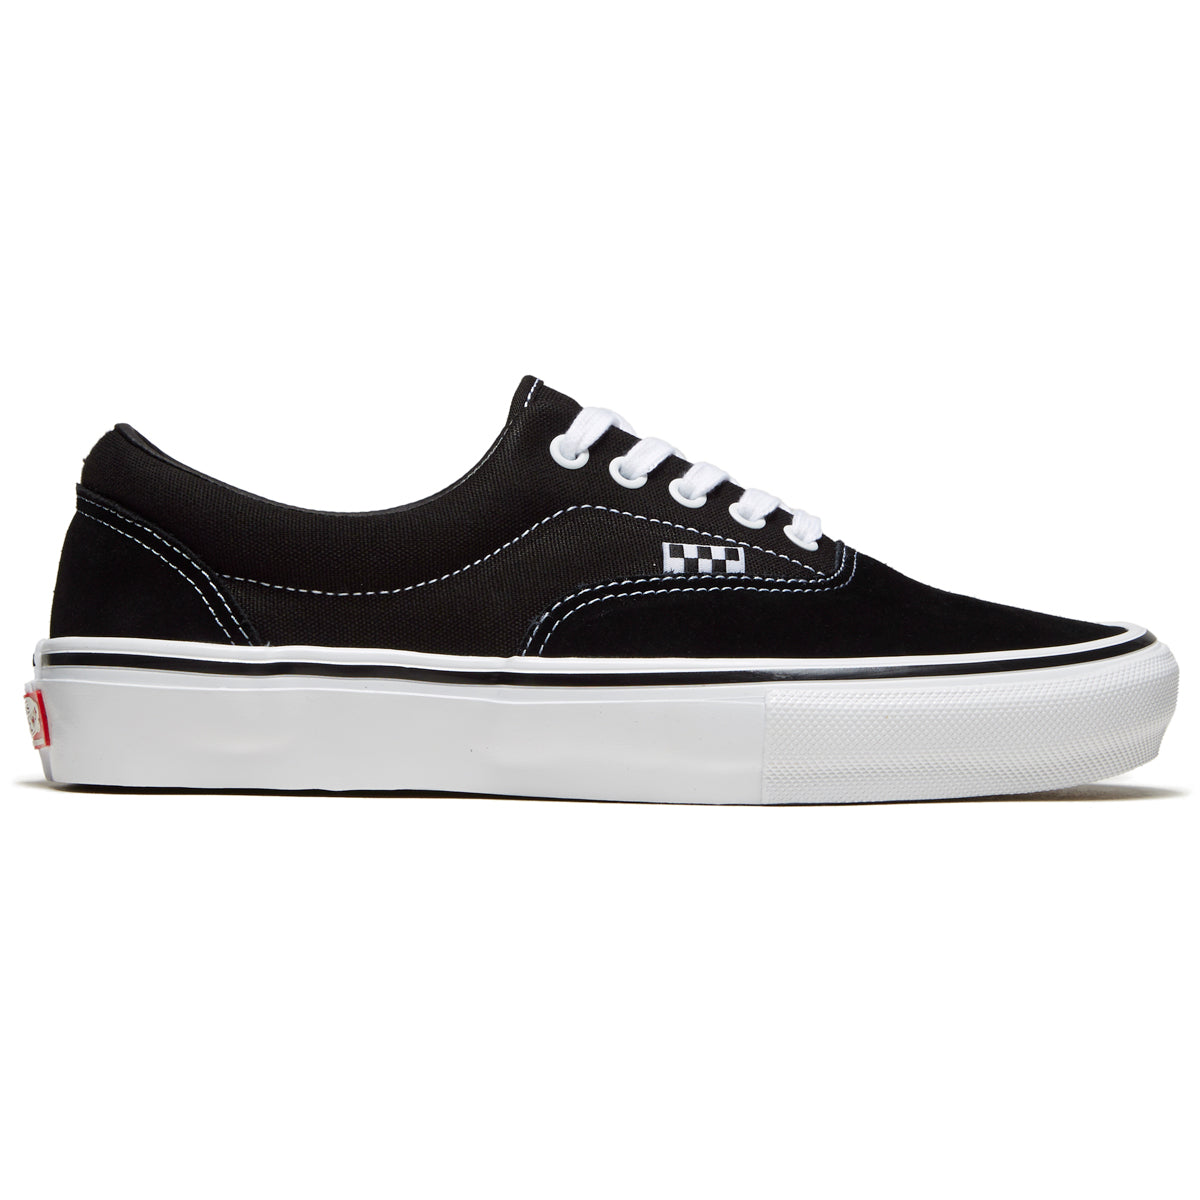 Vans Skate Era Shoes - Black/White image 1